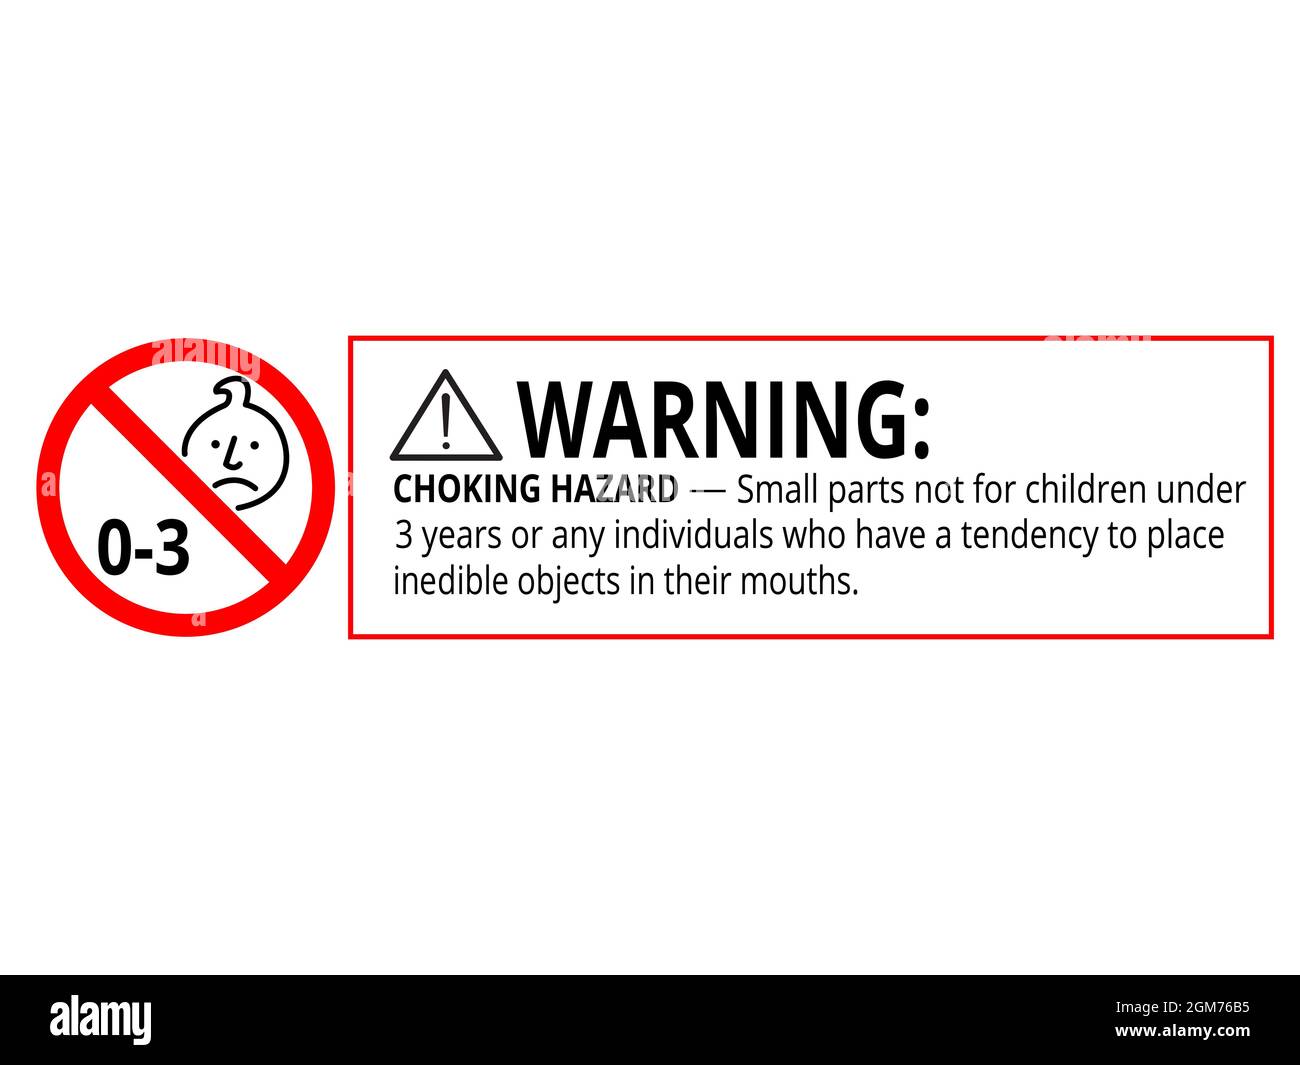 warning-choking-hazard-small-parts-for-children-under-years-hi-res